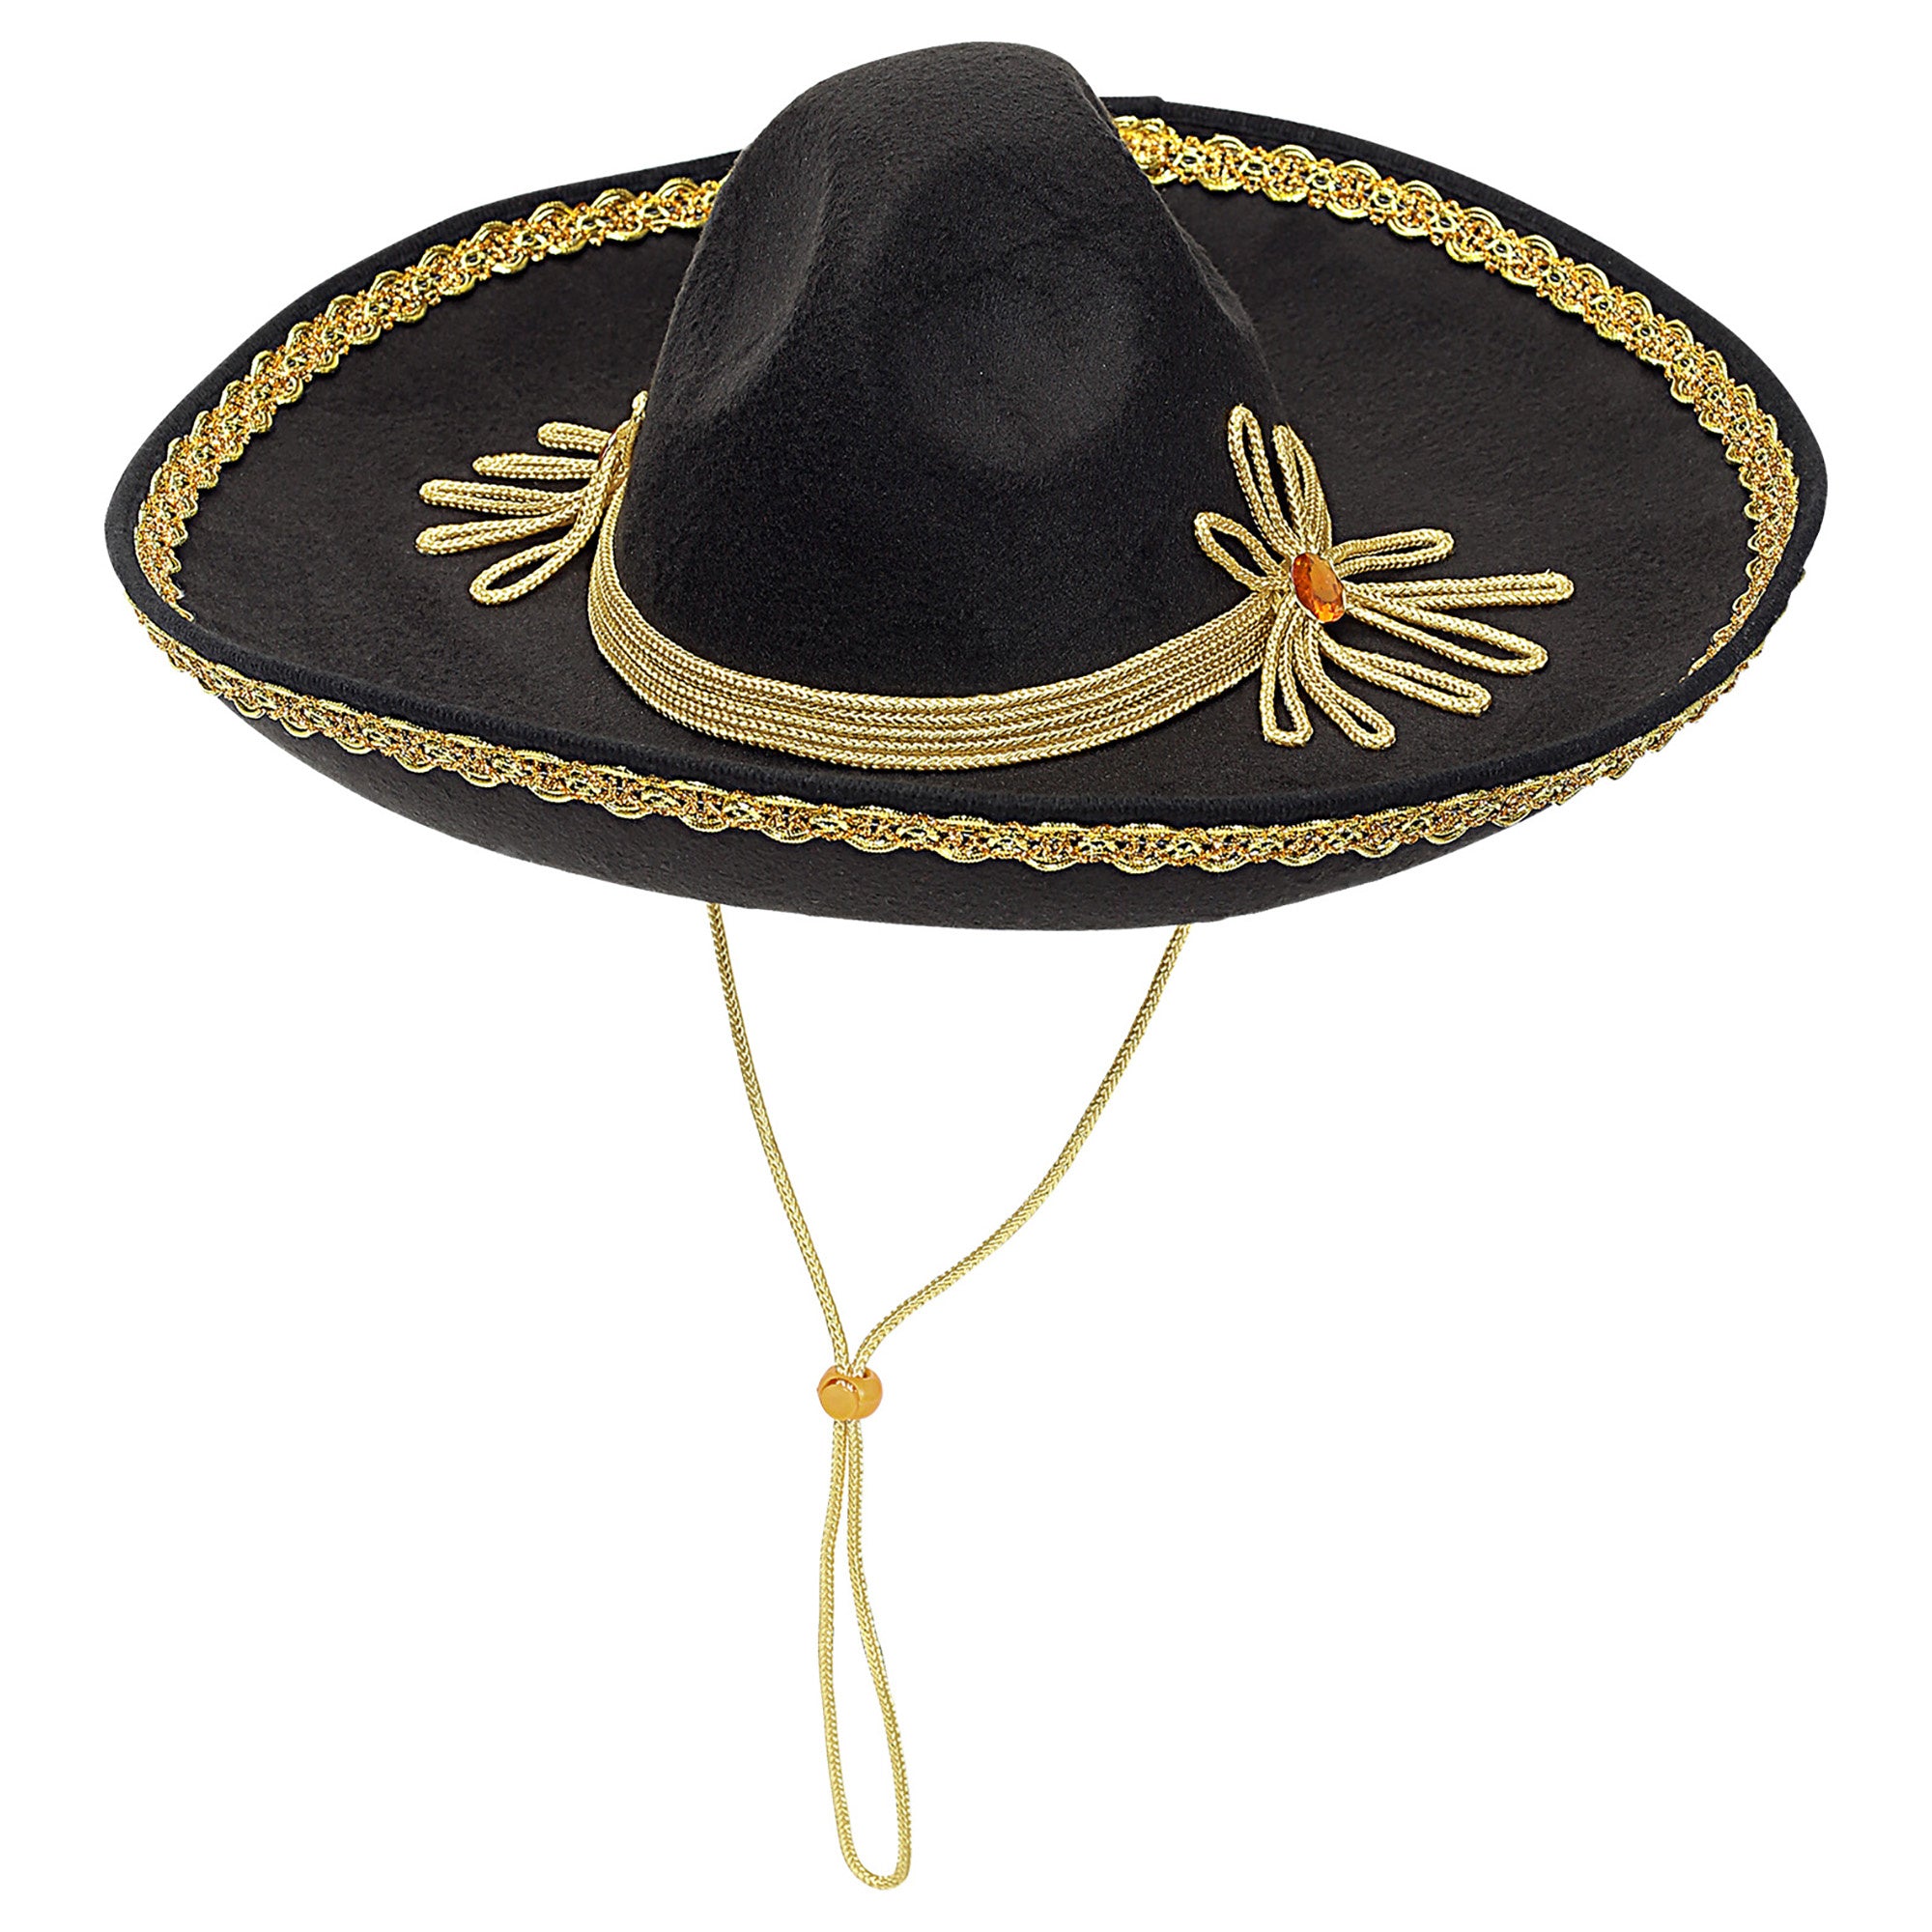 Widmann - Spaans & Mexicaans Kostuum - Manuel Mariachi Sombrero 50 Centimeter - zwart,goud - Carnavalskleding - Verkleedkleding